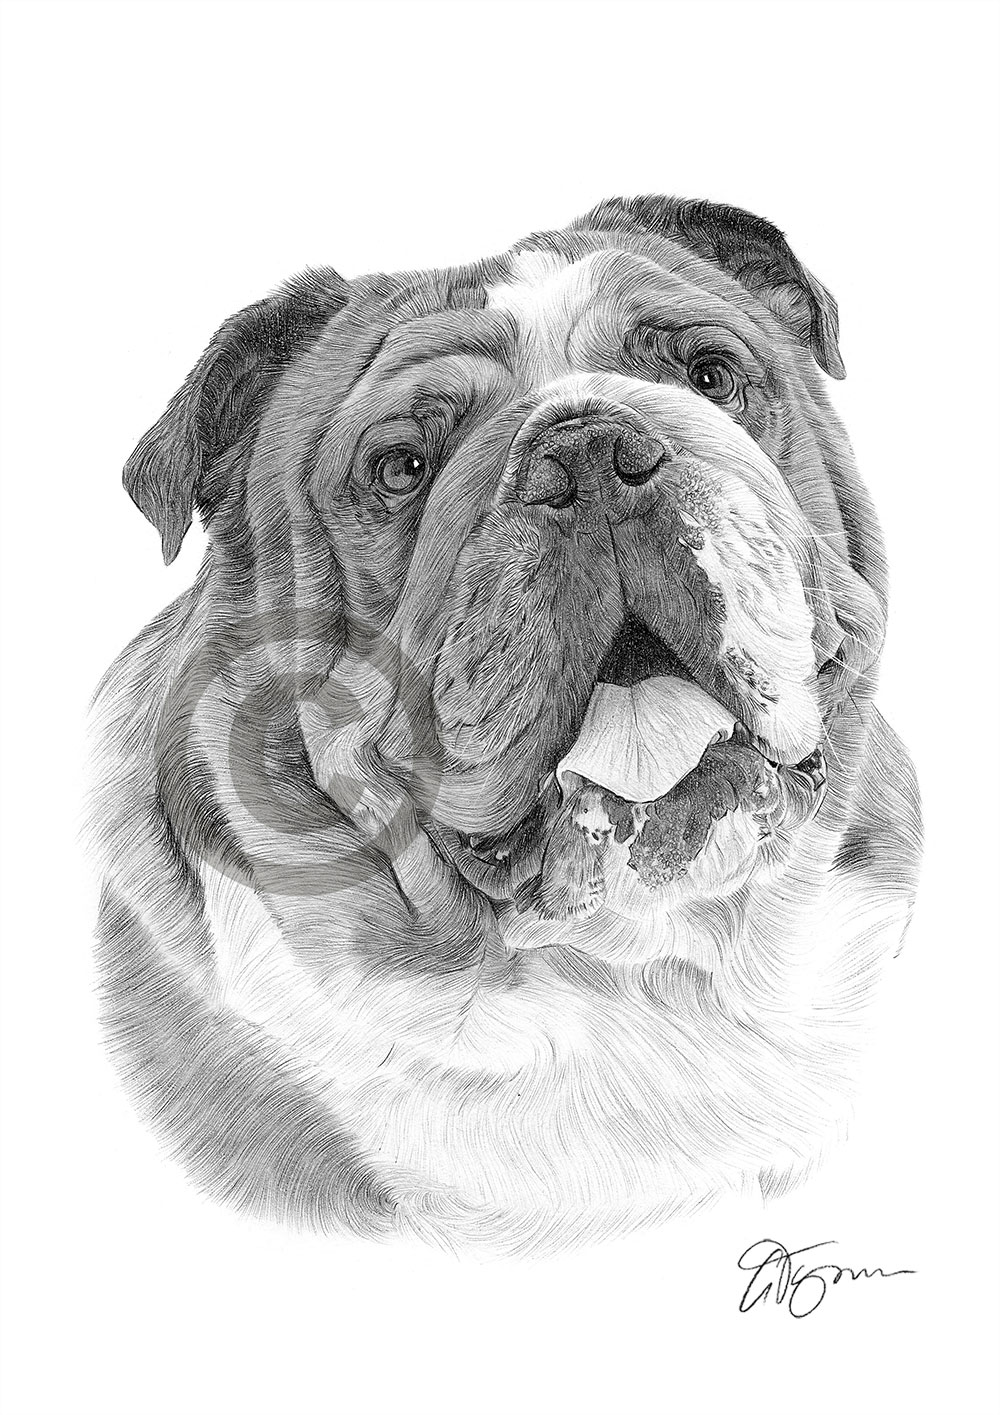 Pencil drawing of an adult English Bulldog by artist Gary Tymon